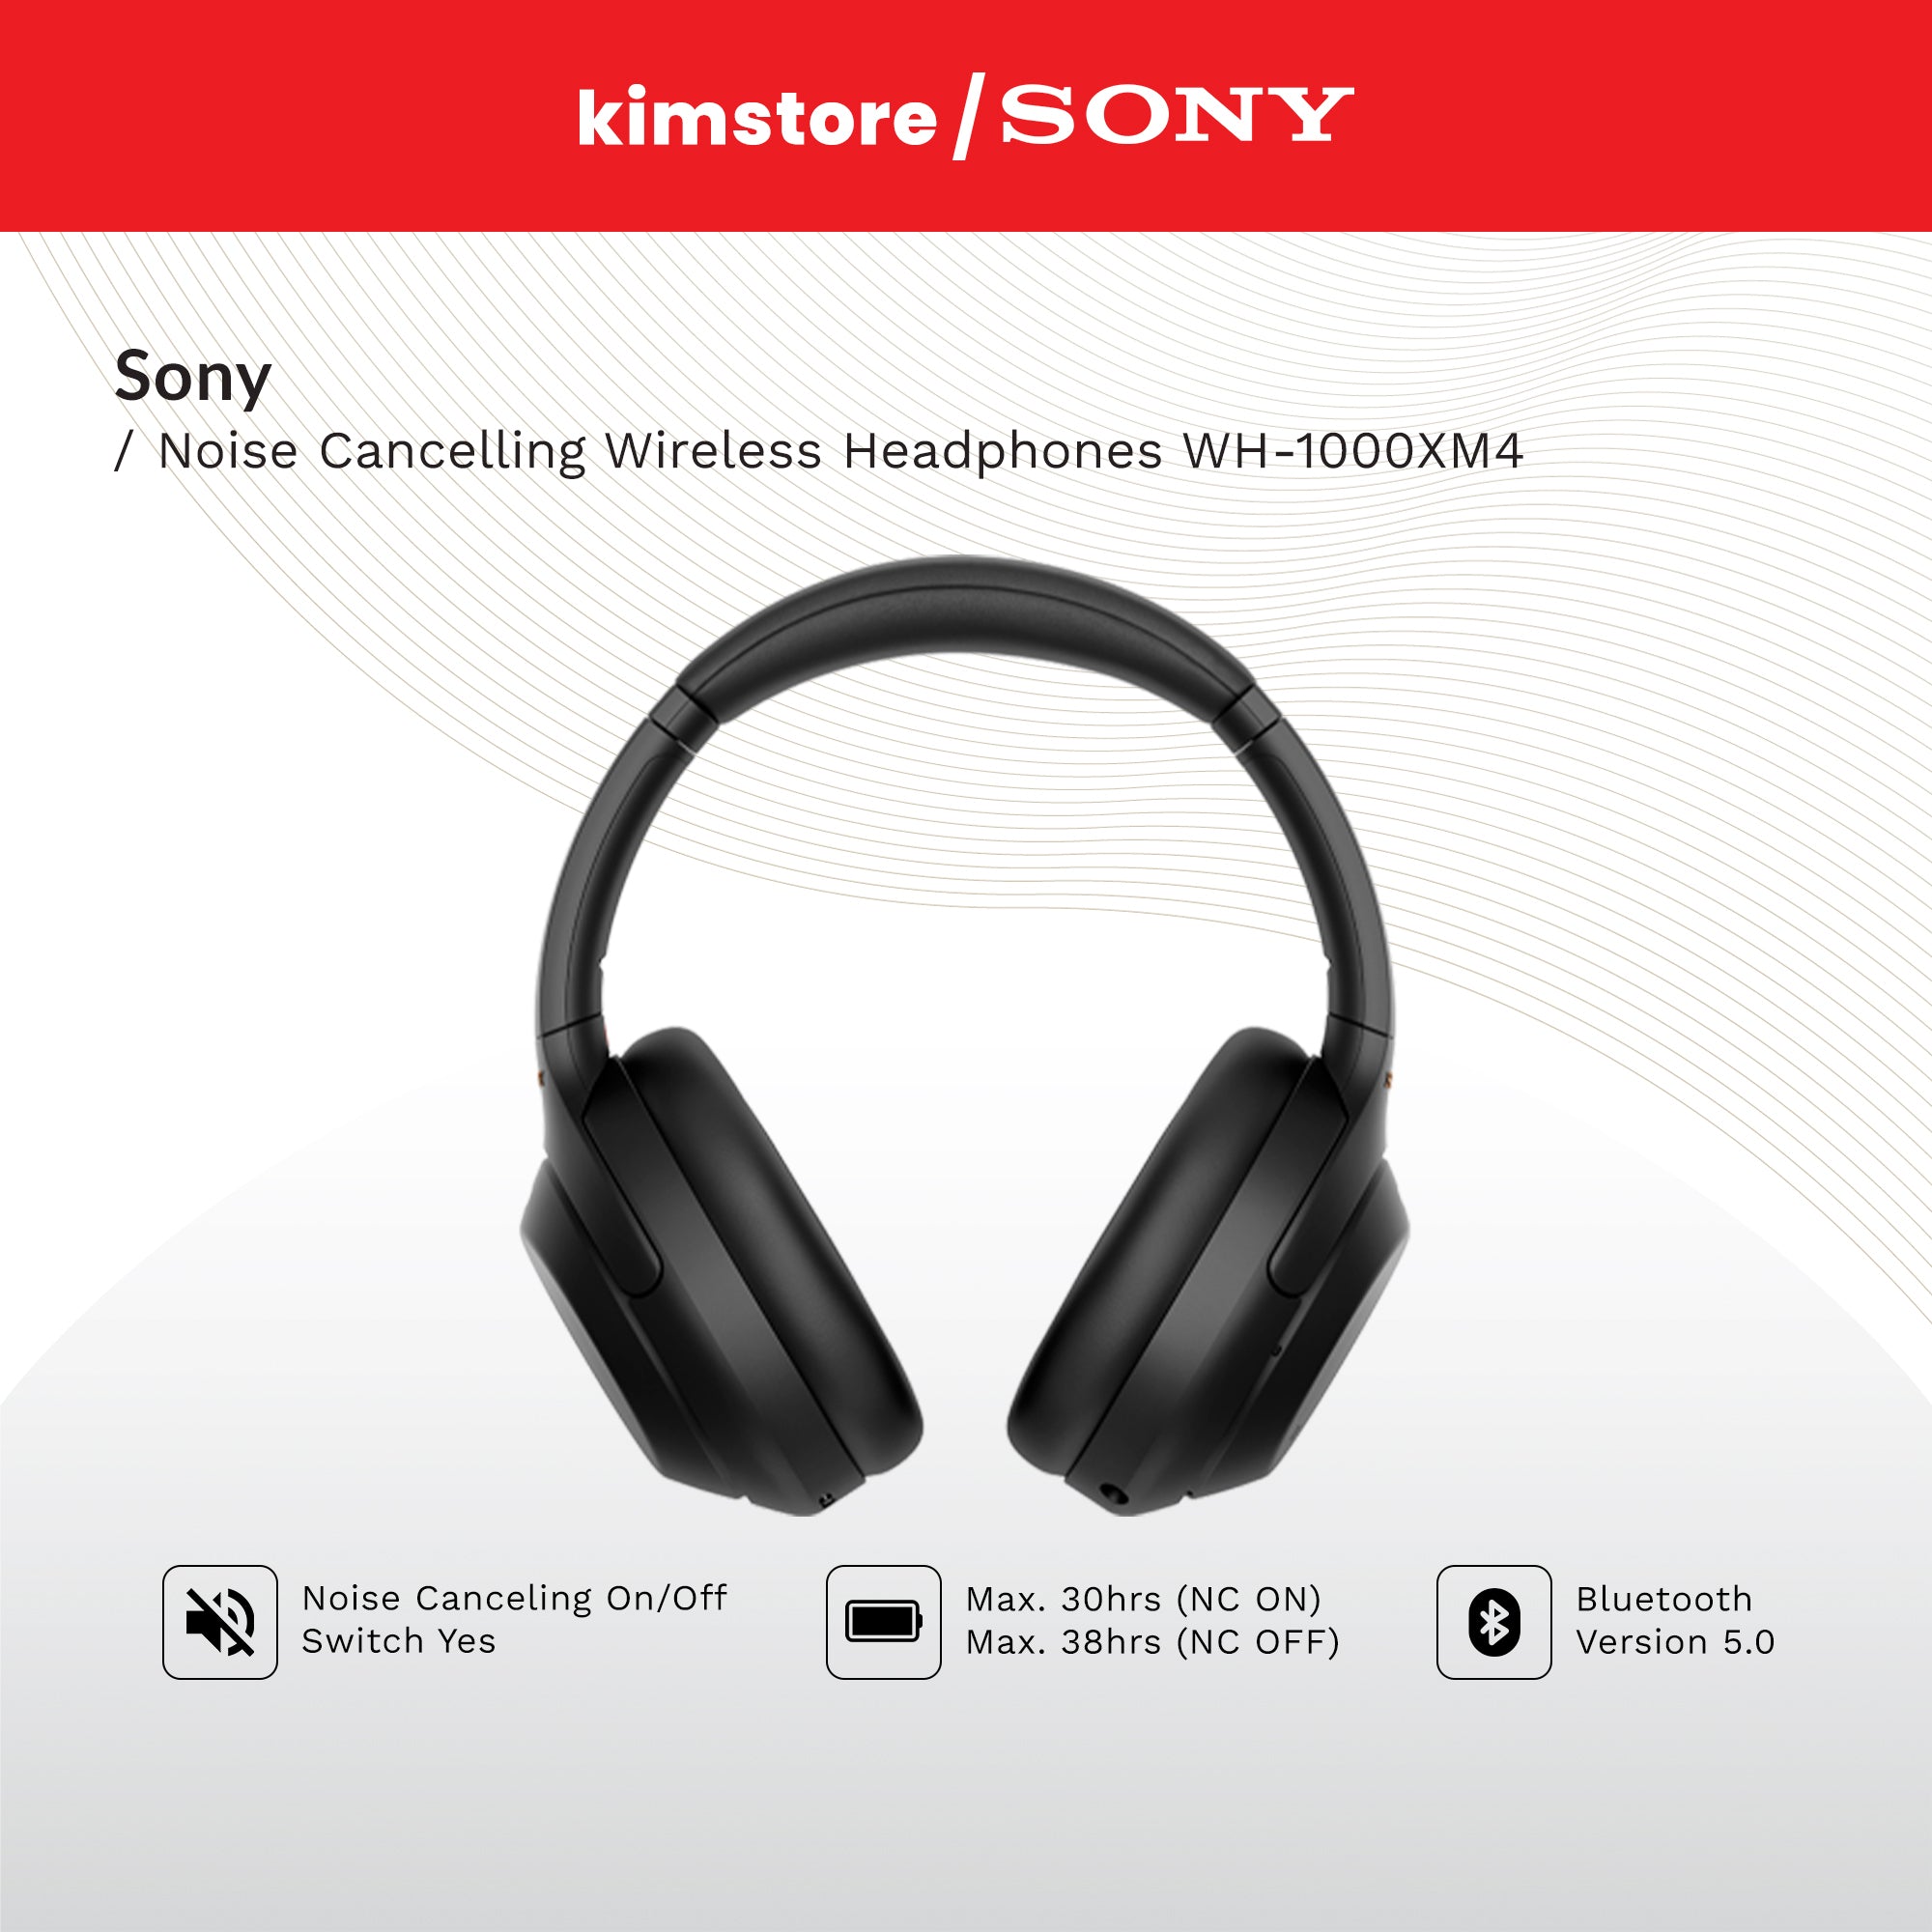 SONY Noise Cancelling Wireless Headphones WH-1000XM4 - Black